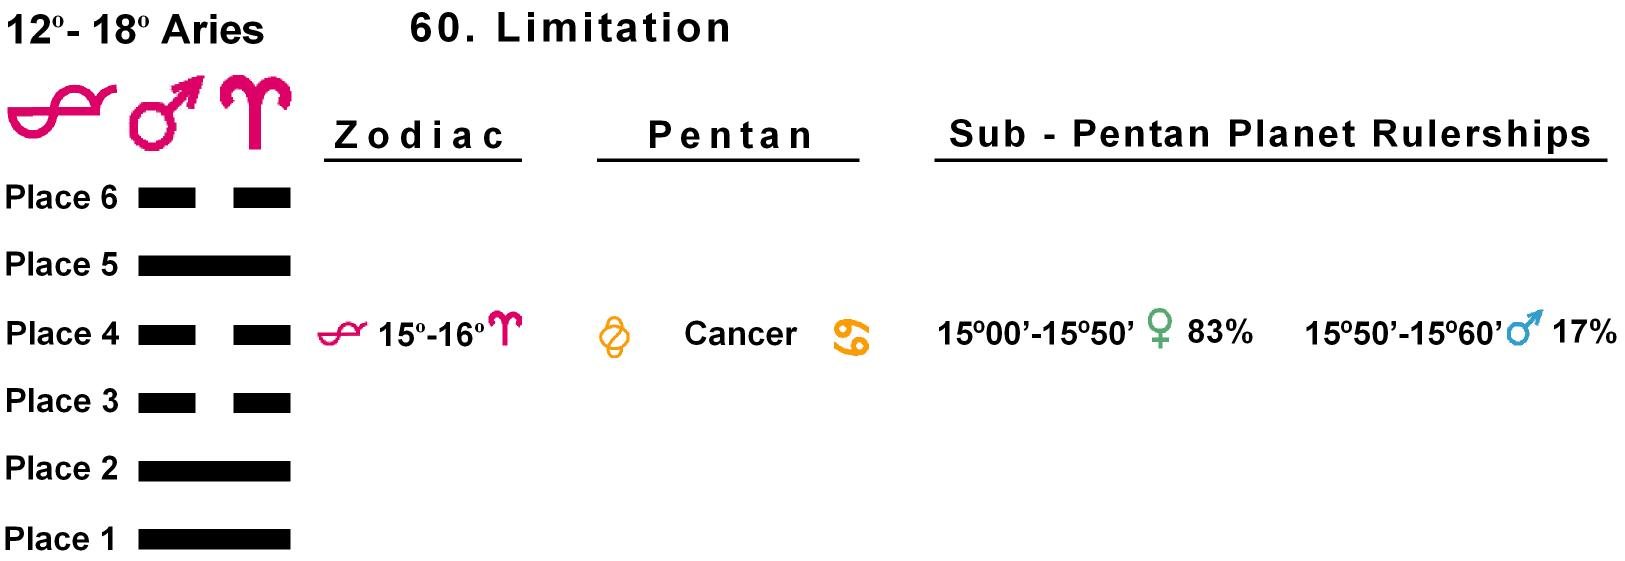 Pent-lines-01AR 15-16 Hx-60 Limitation